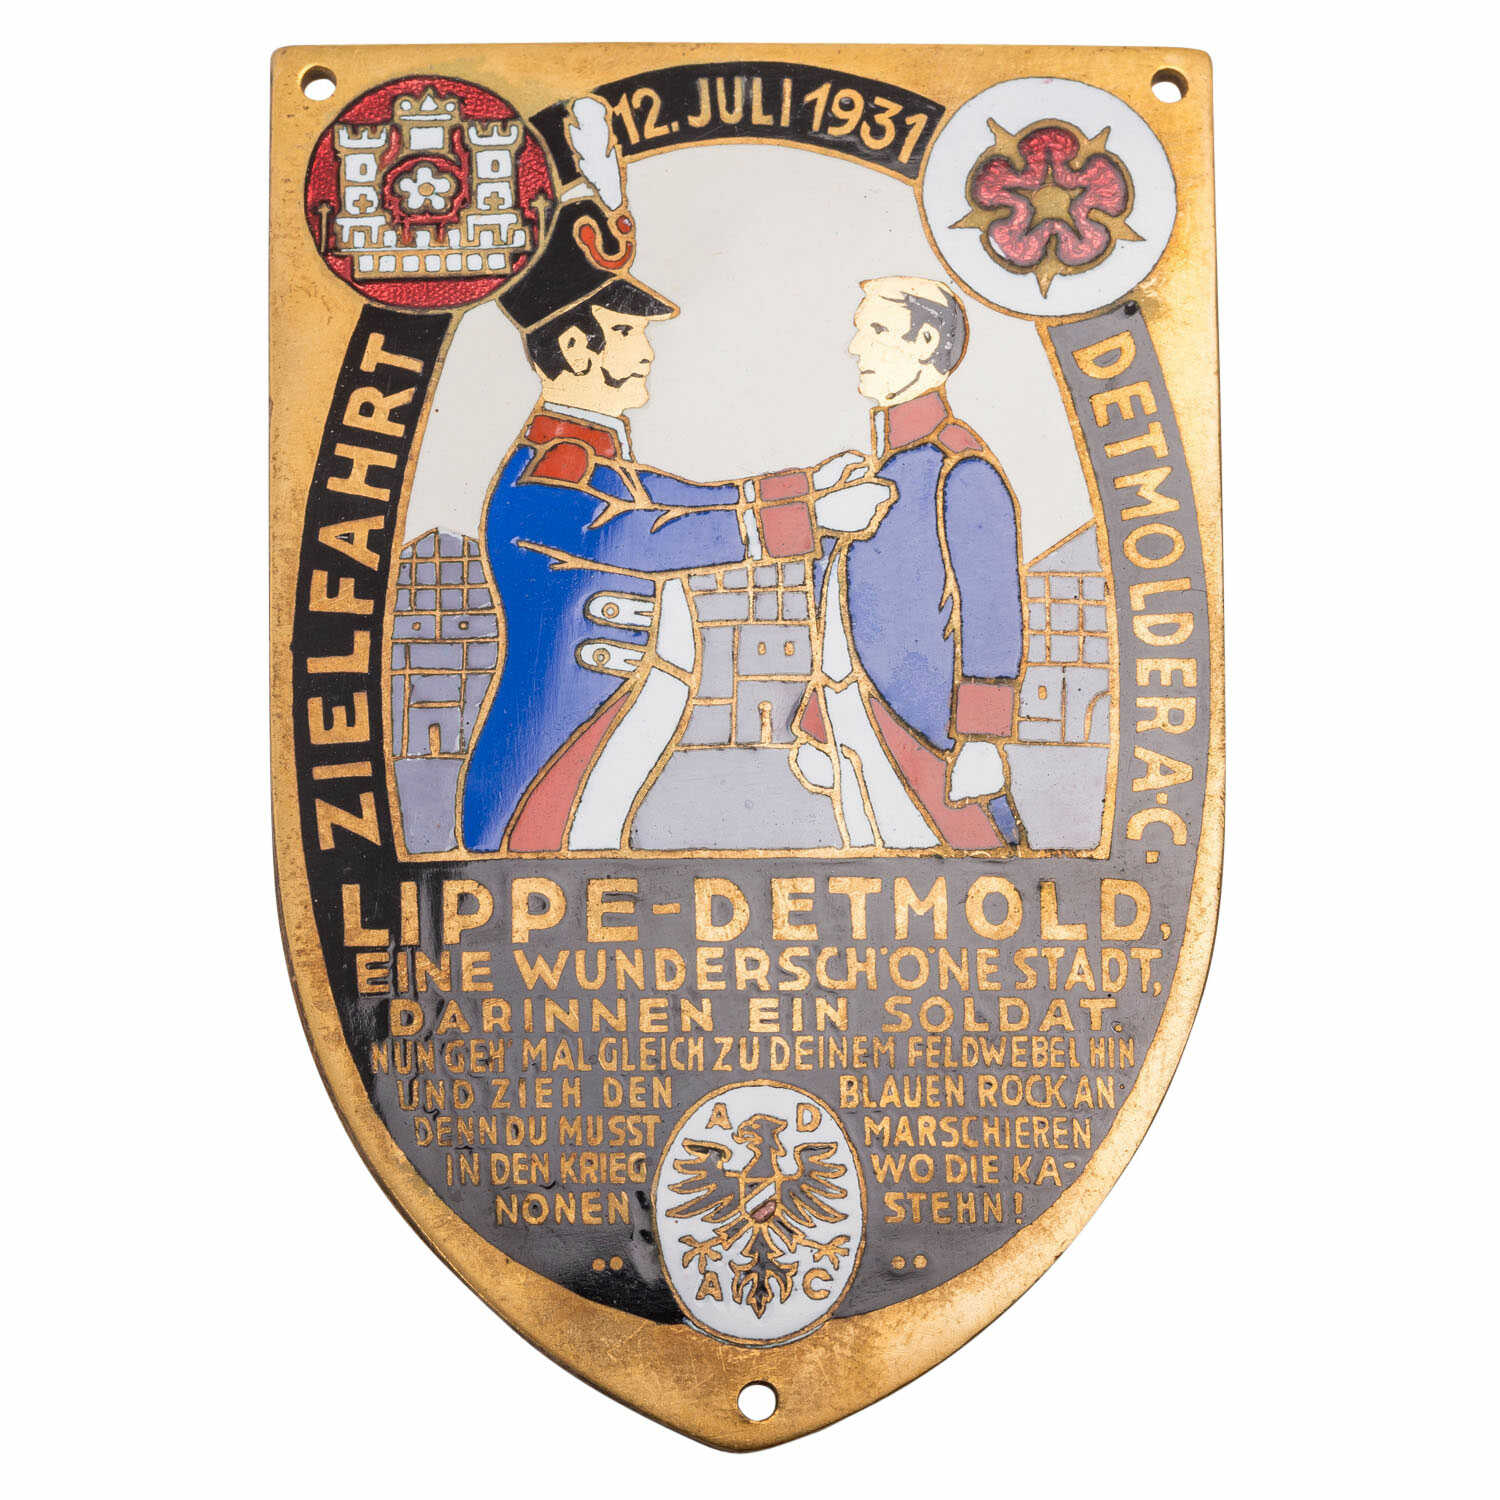 ADAC plaque 1931 Lippe-Detmold,